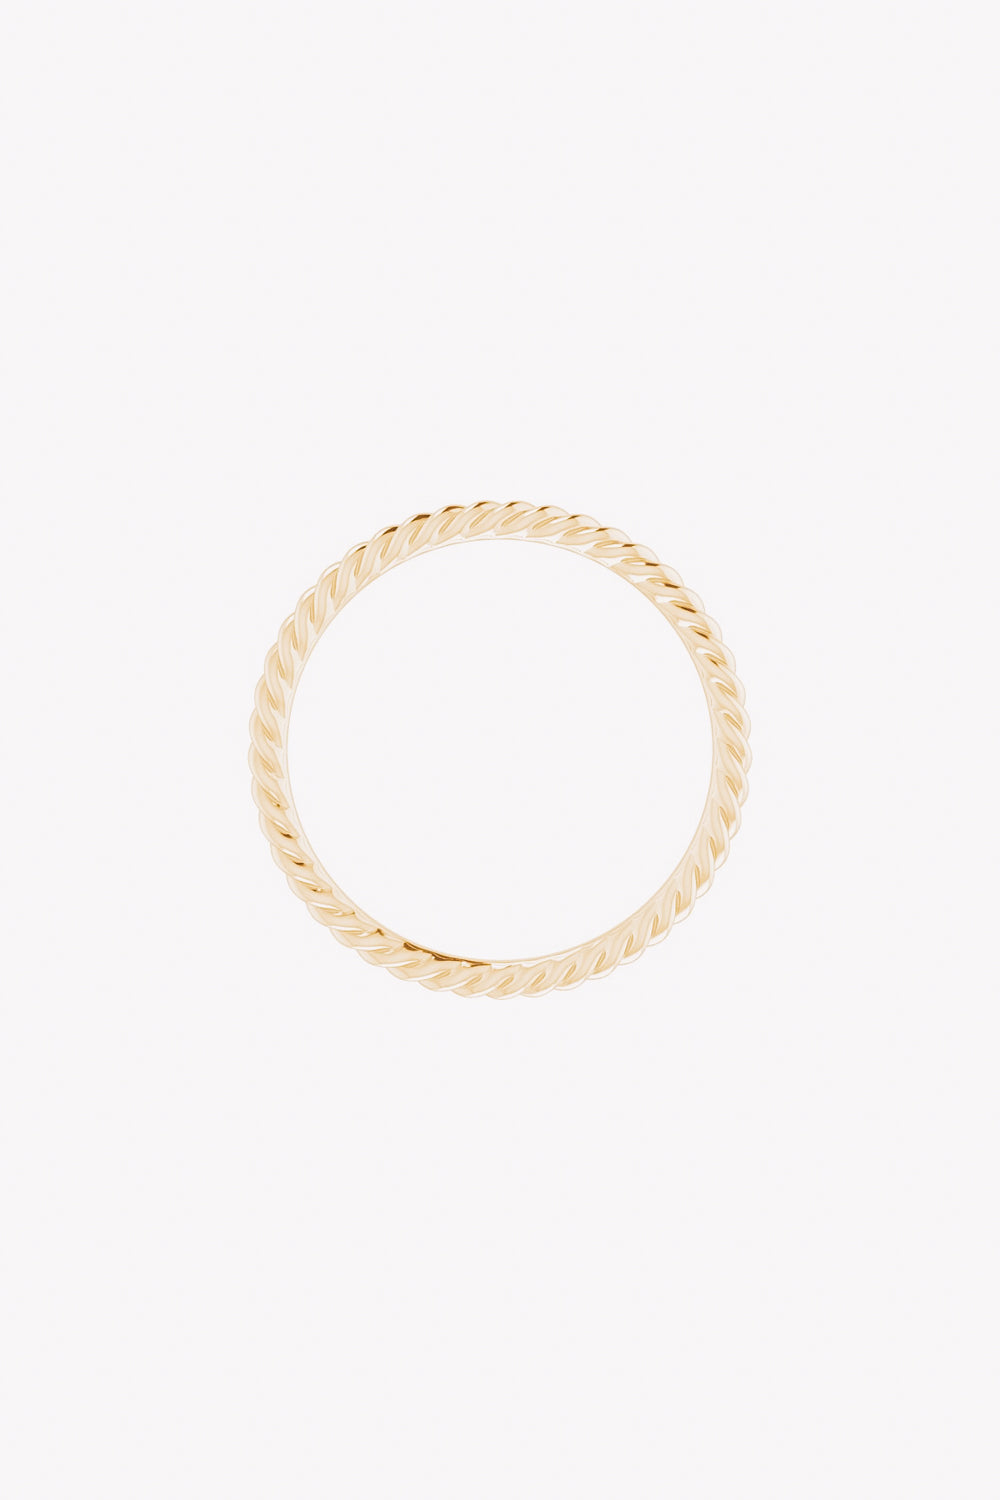 1.5 mm Skinny Rope Band | 14K Gold